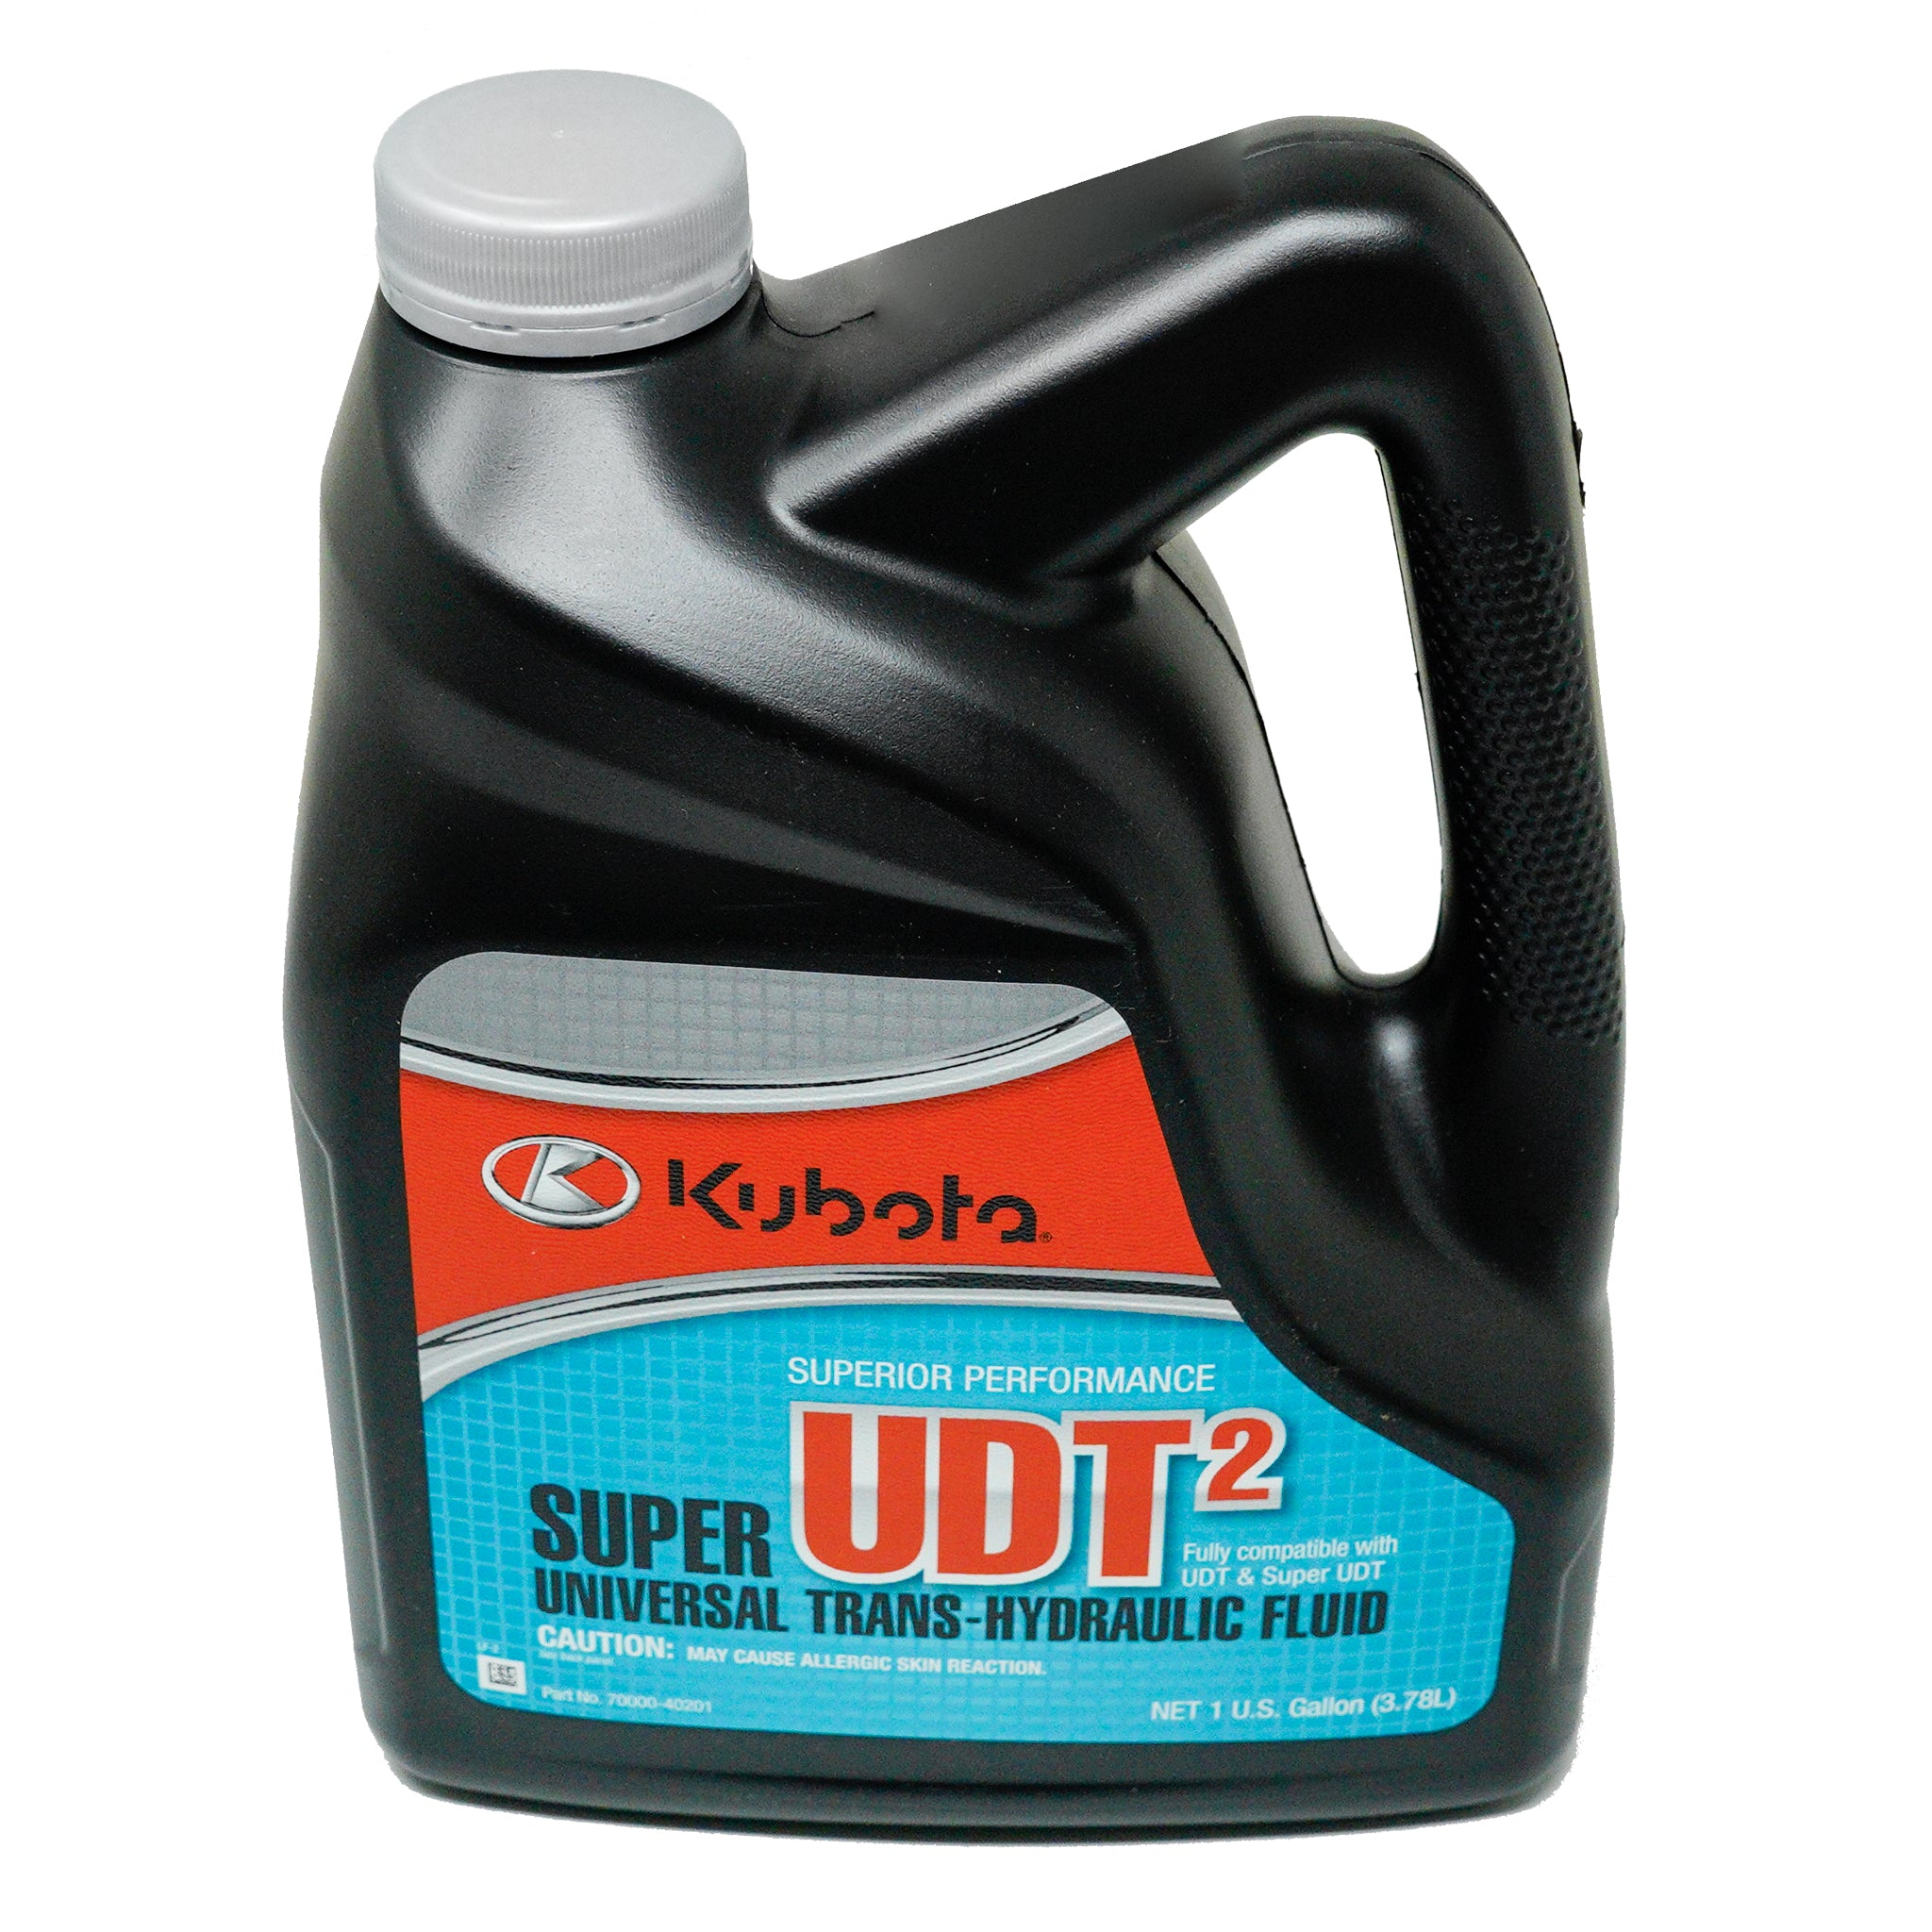 Kubota 70000-40201 Super UDT2 Trans-Hydraulic Fluid 1 Gallon